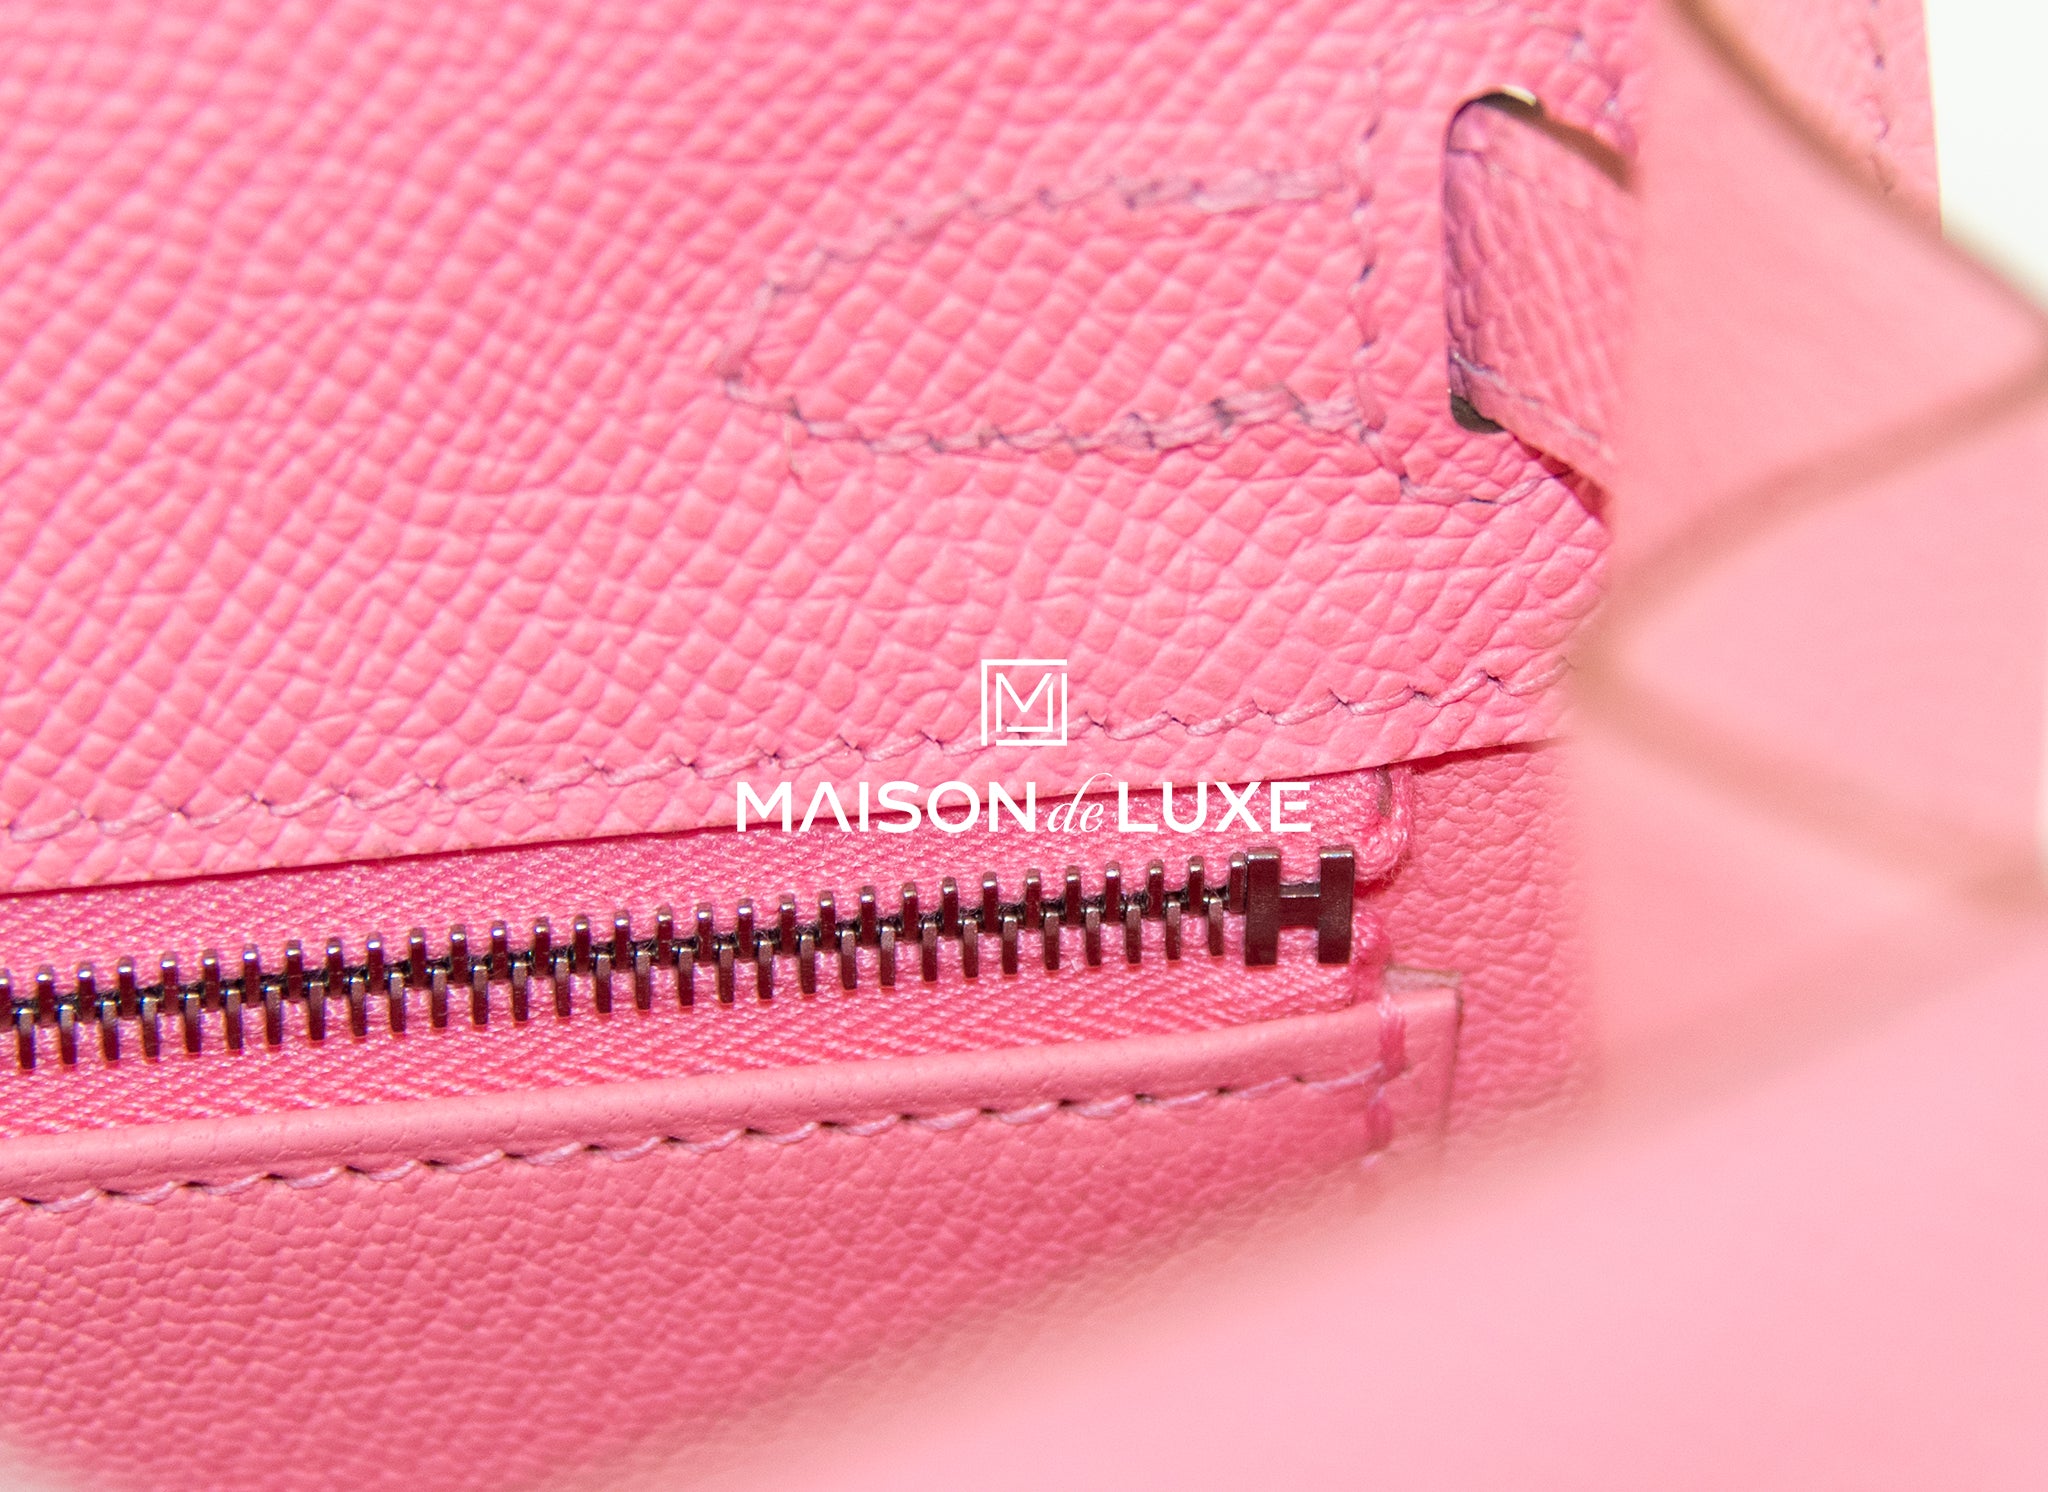 Hermes Kelly Sellier 25 Rose Confetti Epsom Palladium Hardware – Madison  Avenue Couture